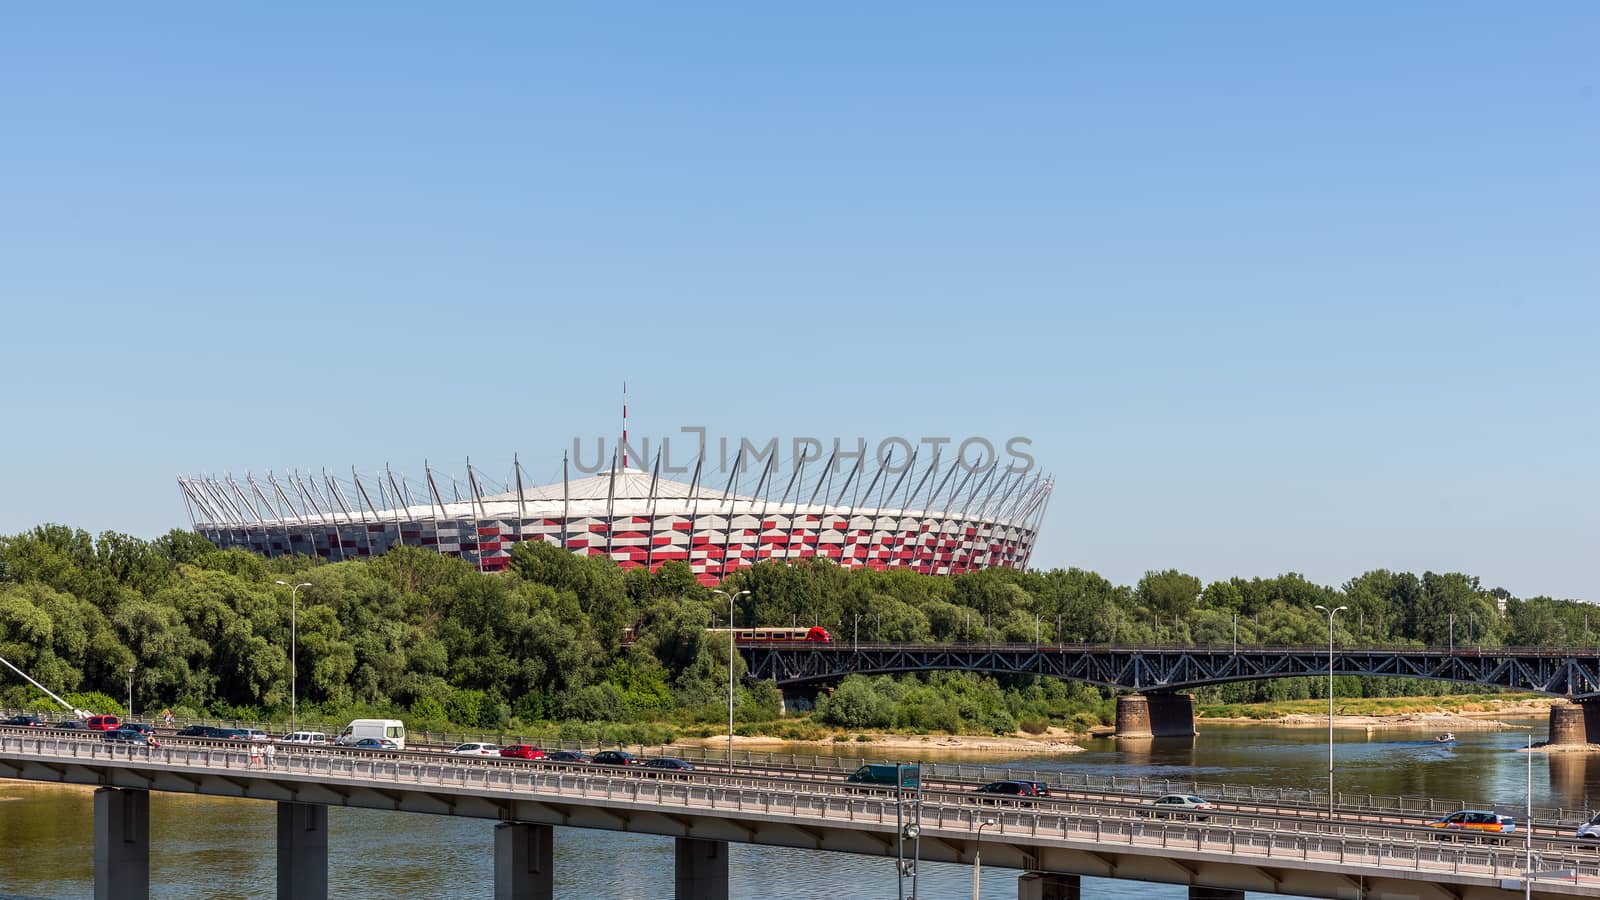 The Polish National Stadium by pawel_szczepanski